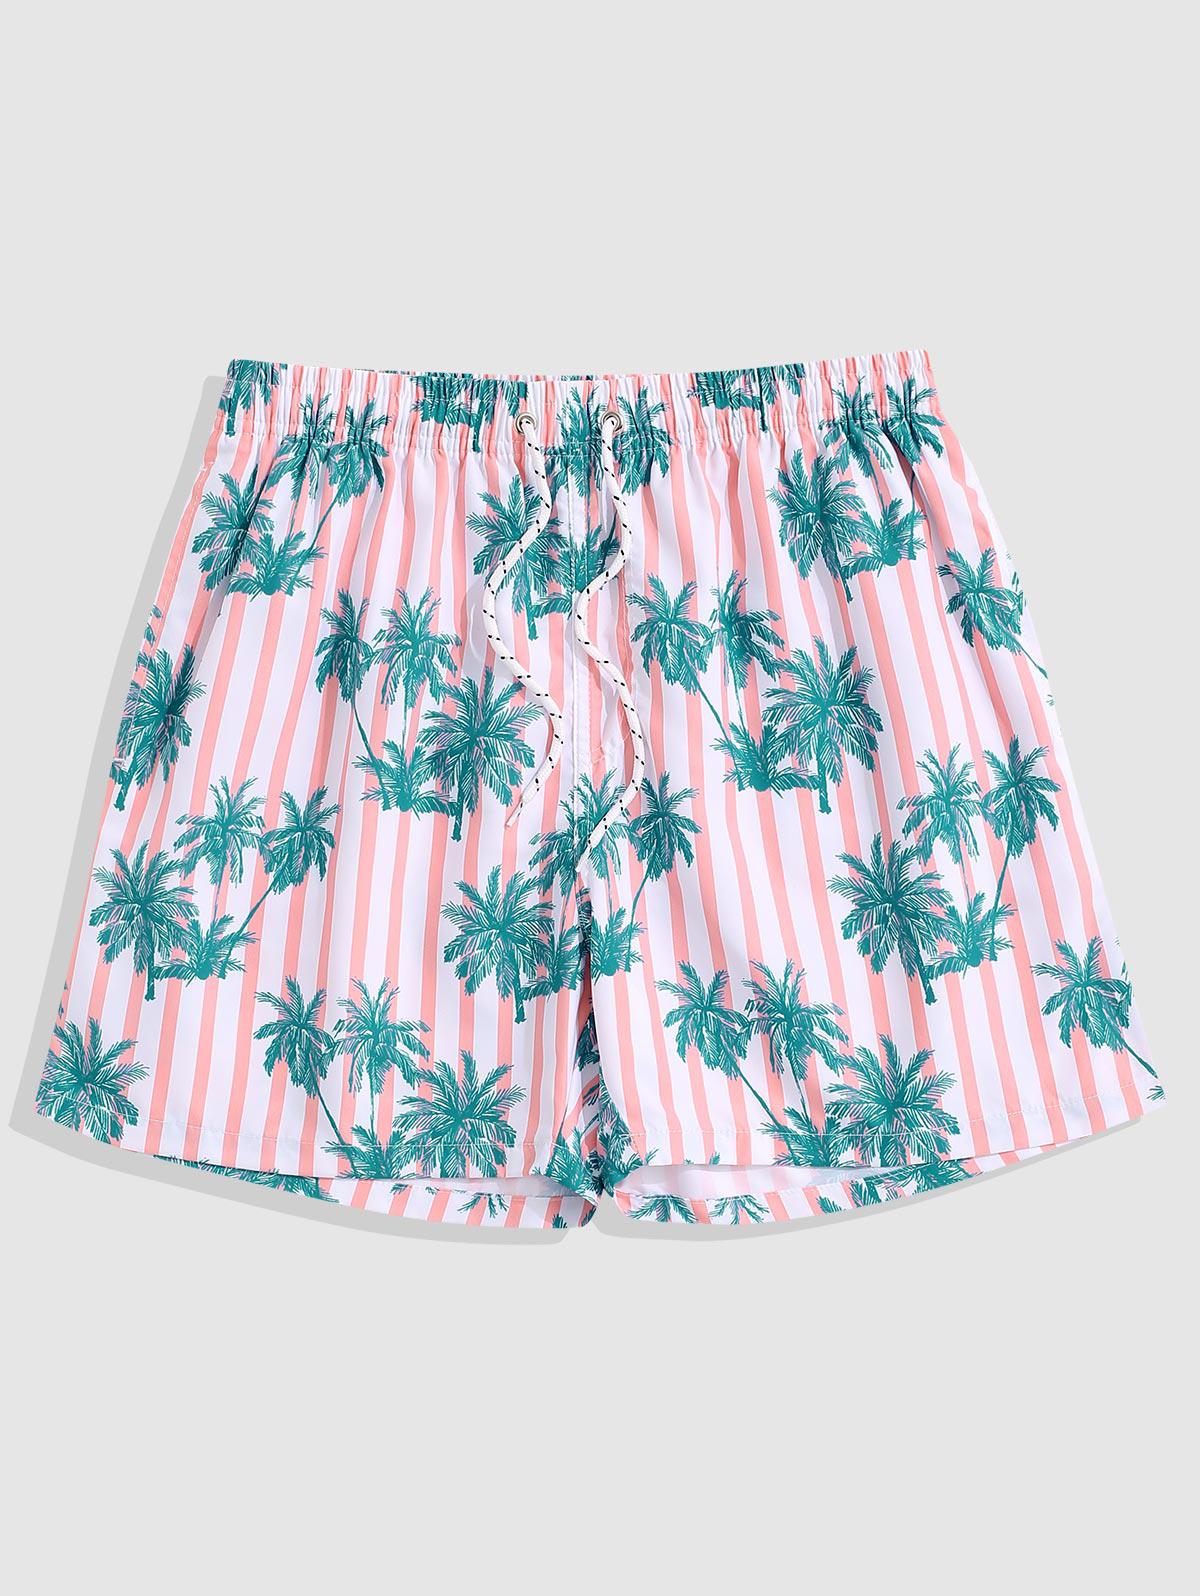 ZAFUL Men's Coconut Palm Tree Stripe Vacation Beach Shorts L Pink